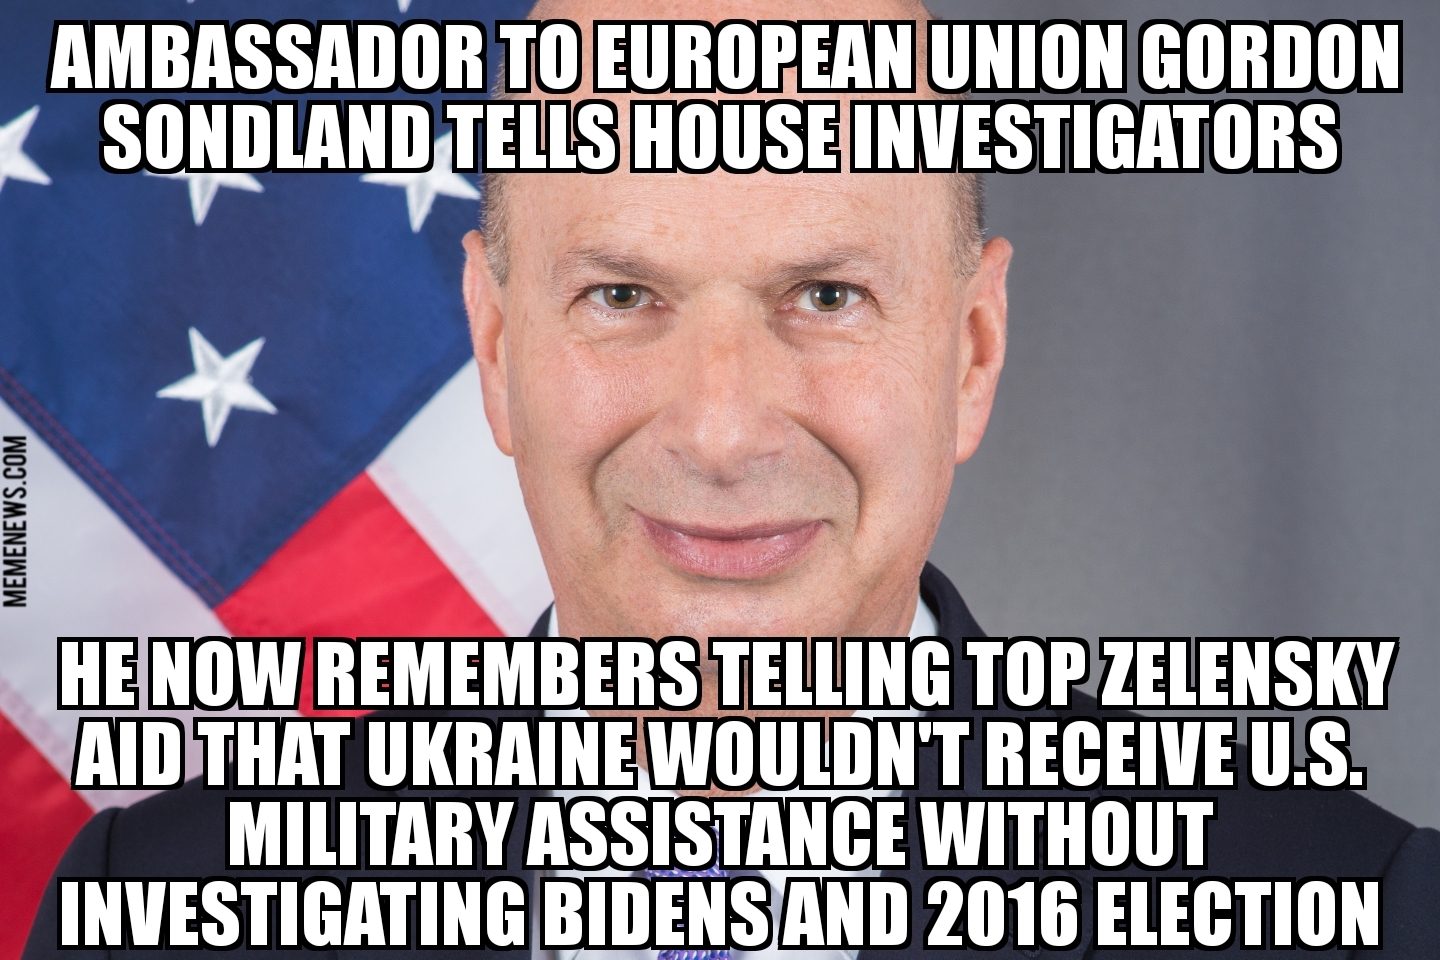 EU Ambassador Gordon Sondland says he now remembers Ukraine aid quid pro quo